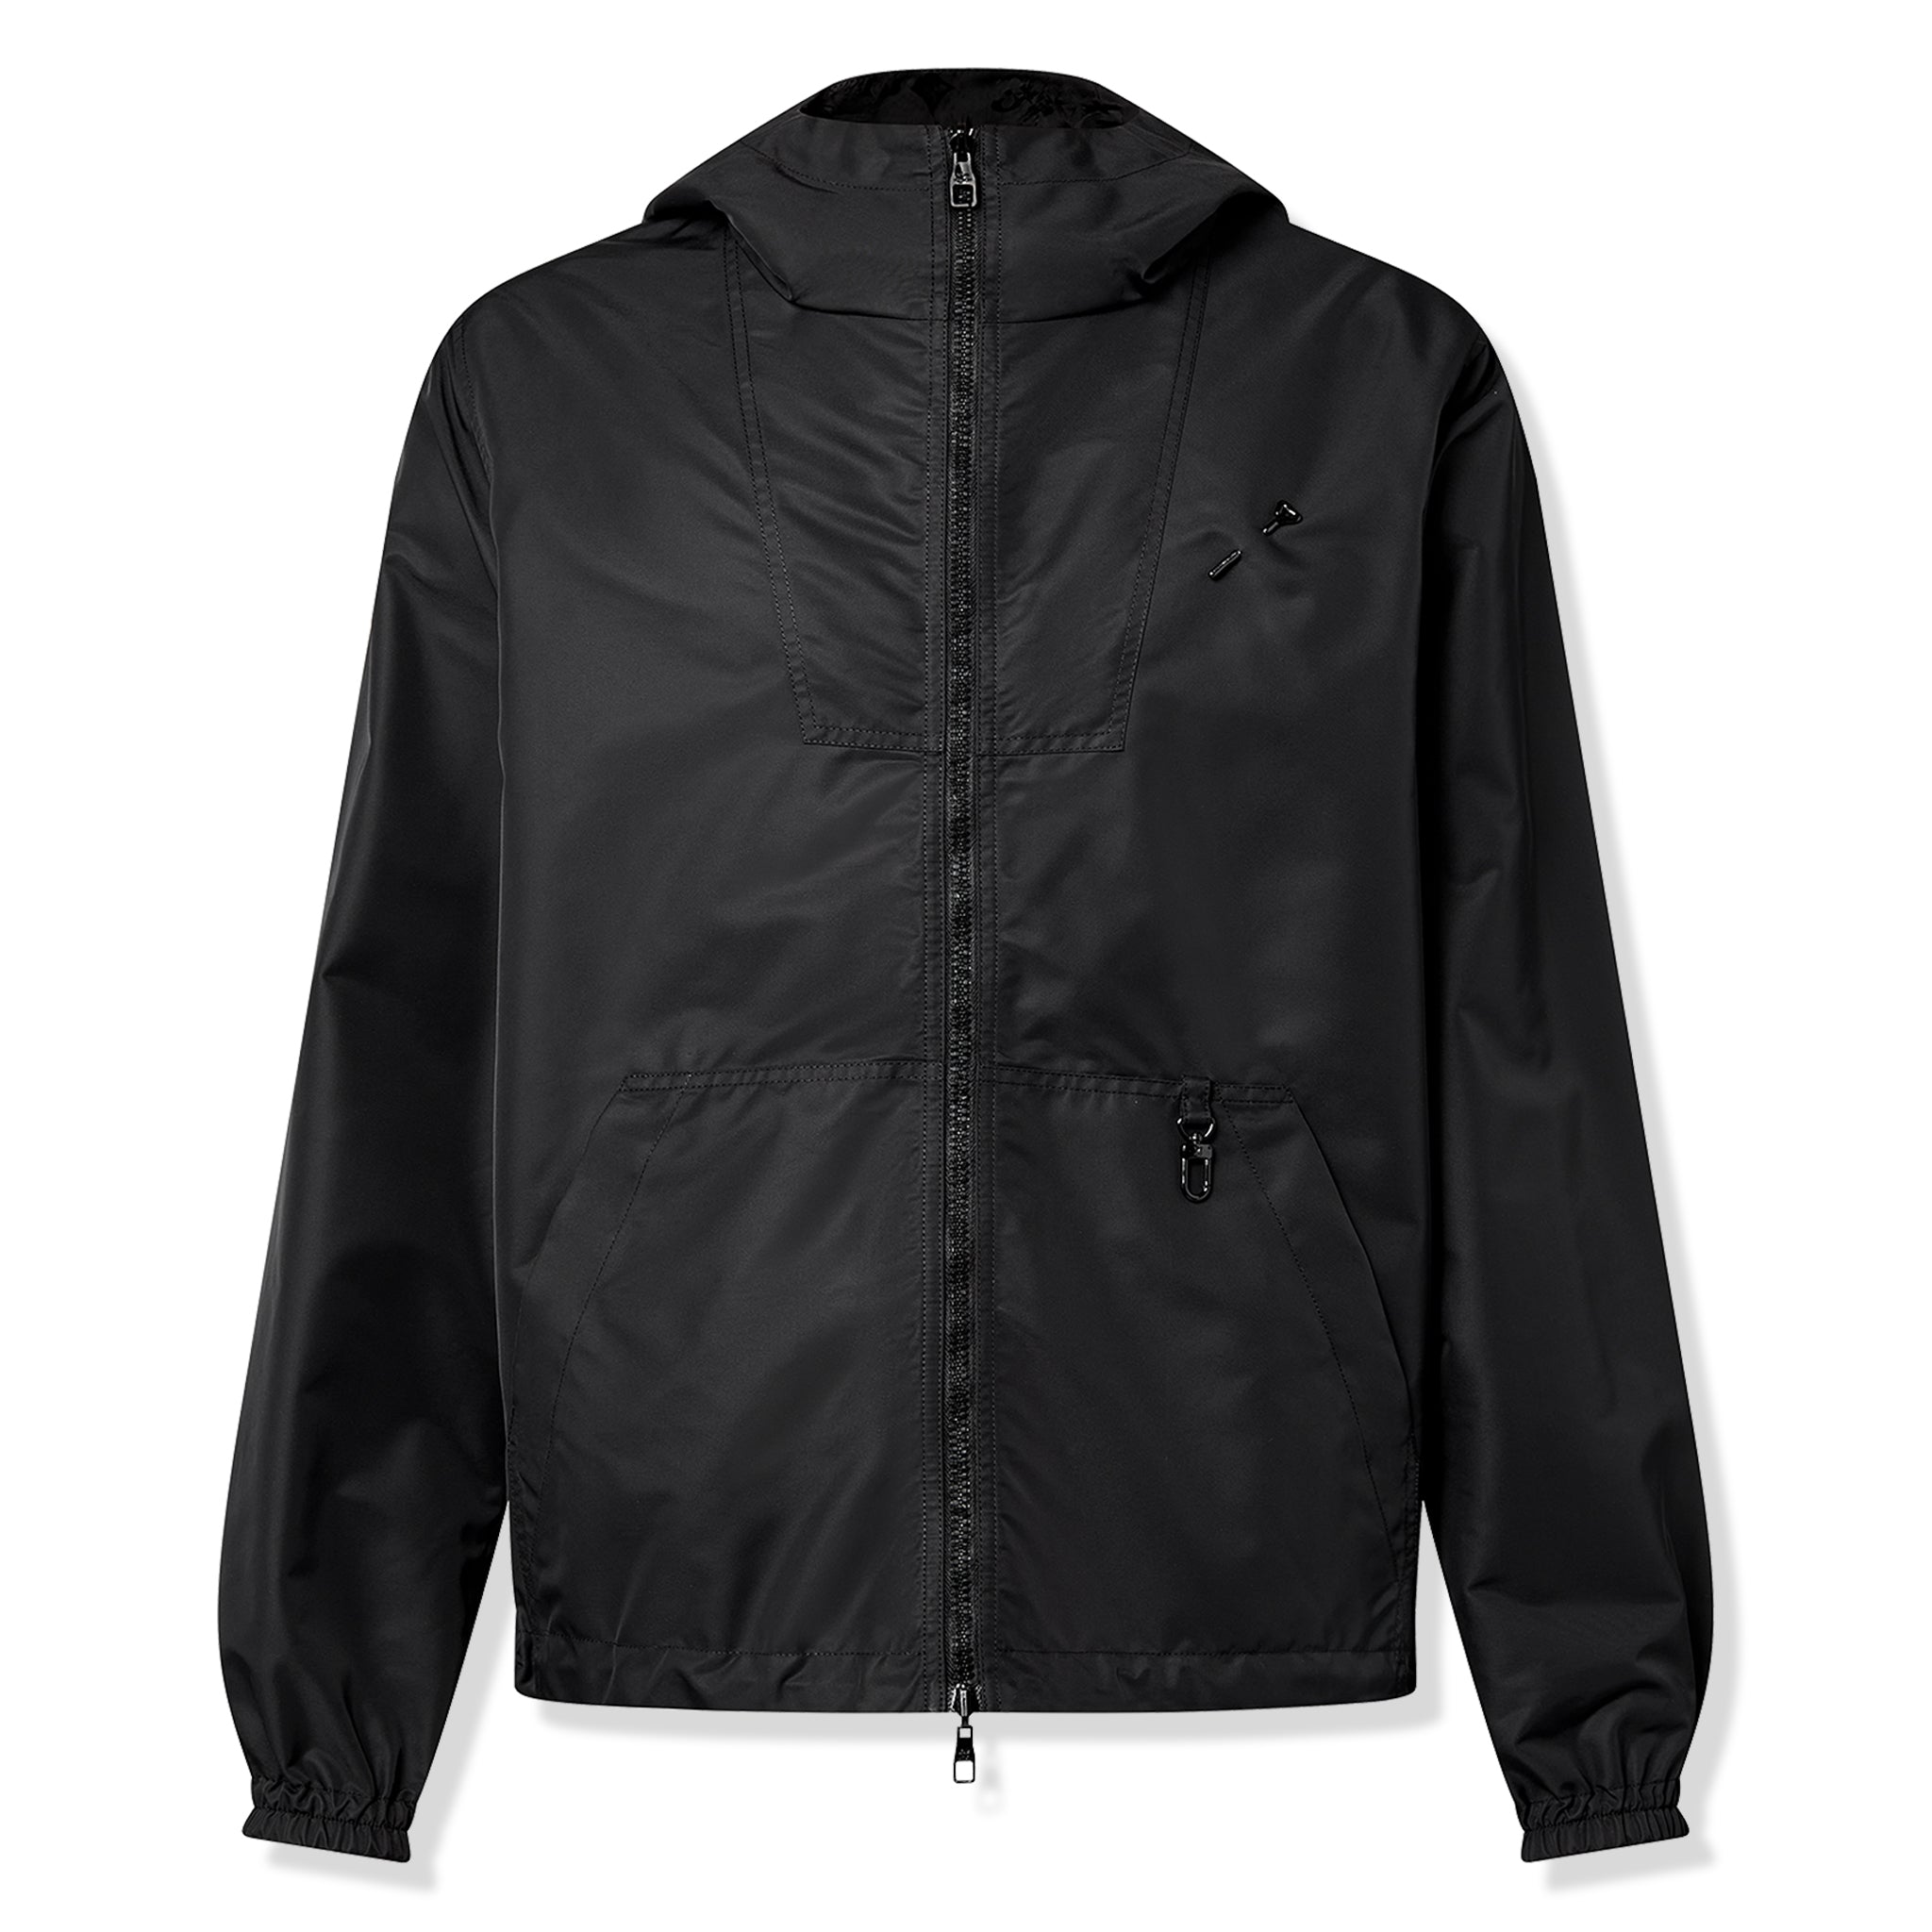 Louis vuitton jacket lv leather jacket, in Aldgate, London